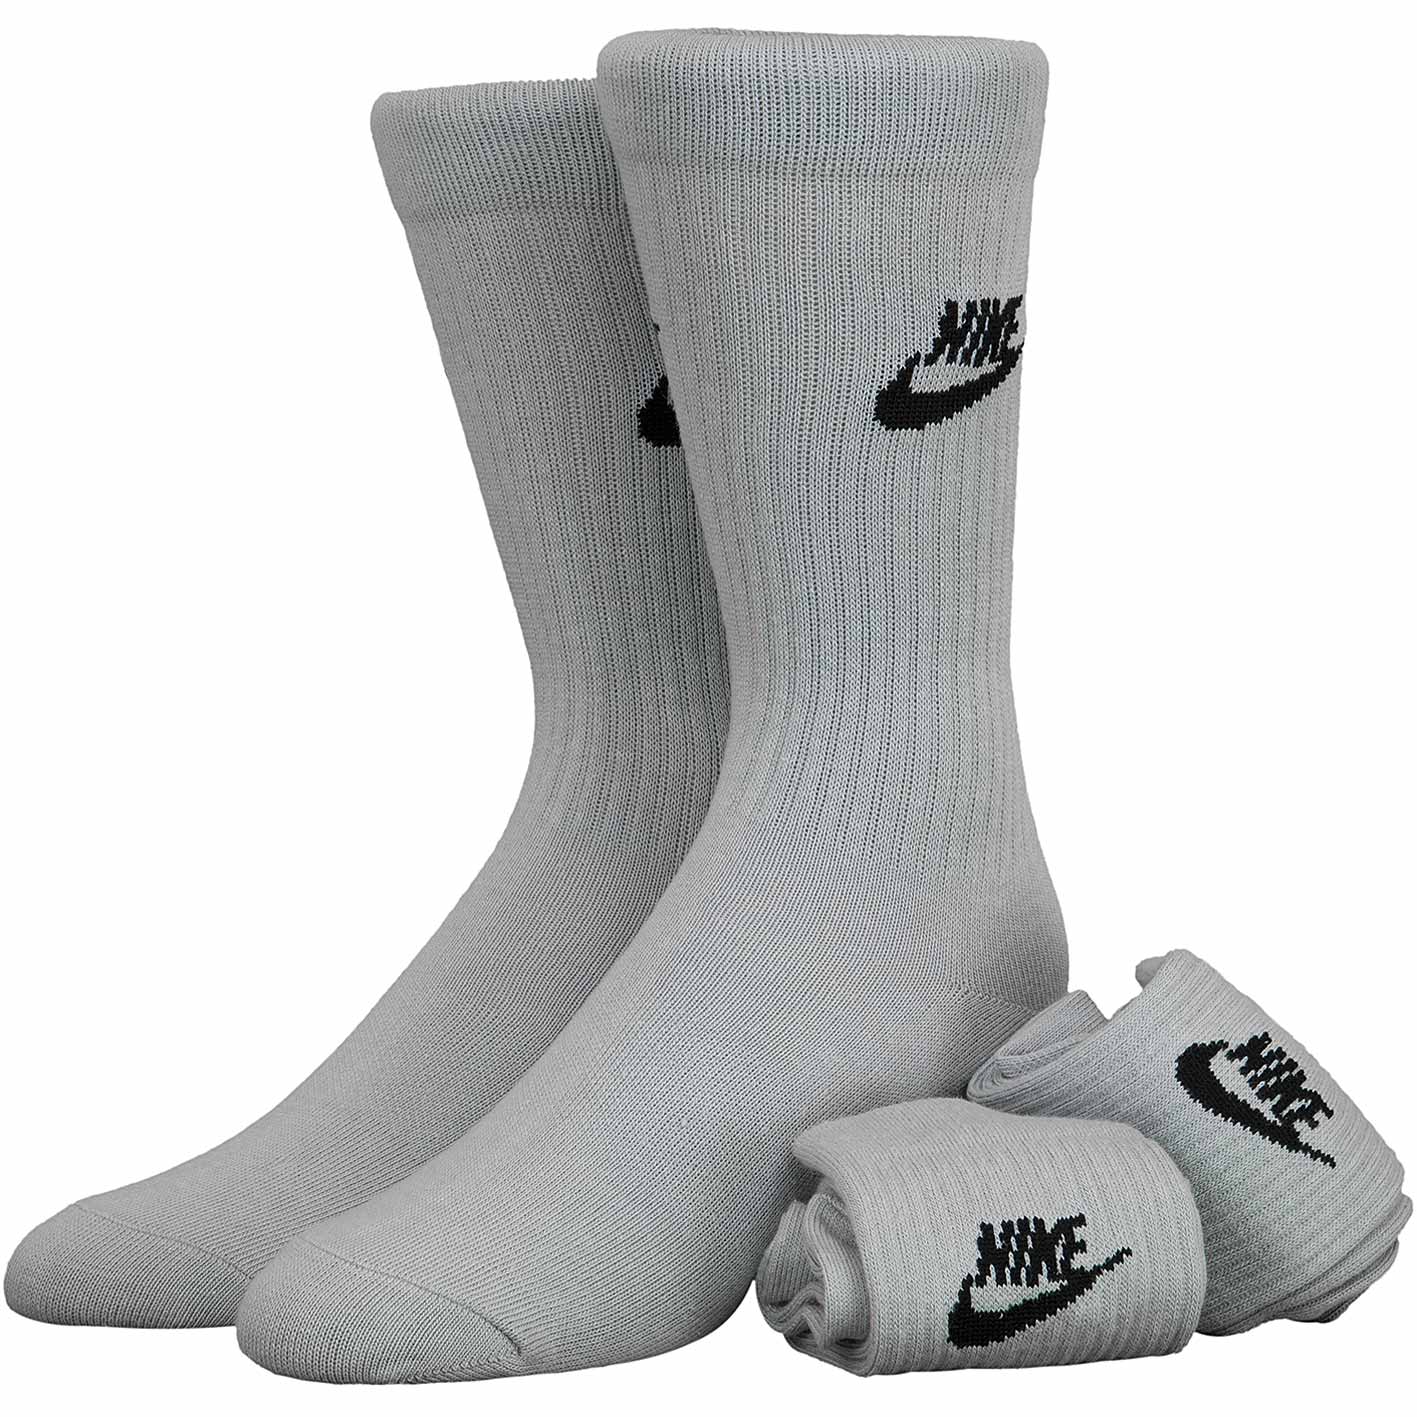 ☆ Nike Socken Essential Crew 3er grau - hier bestellen!